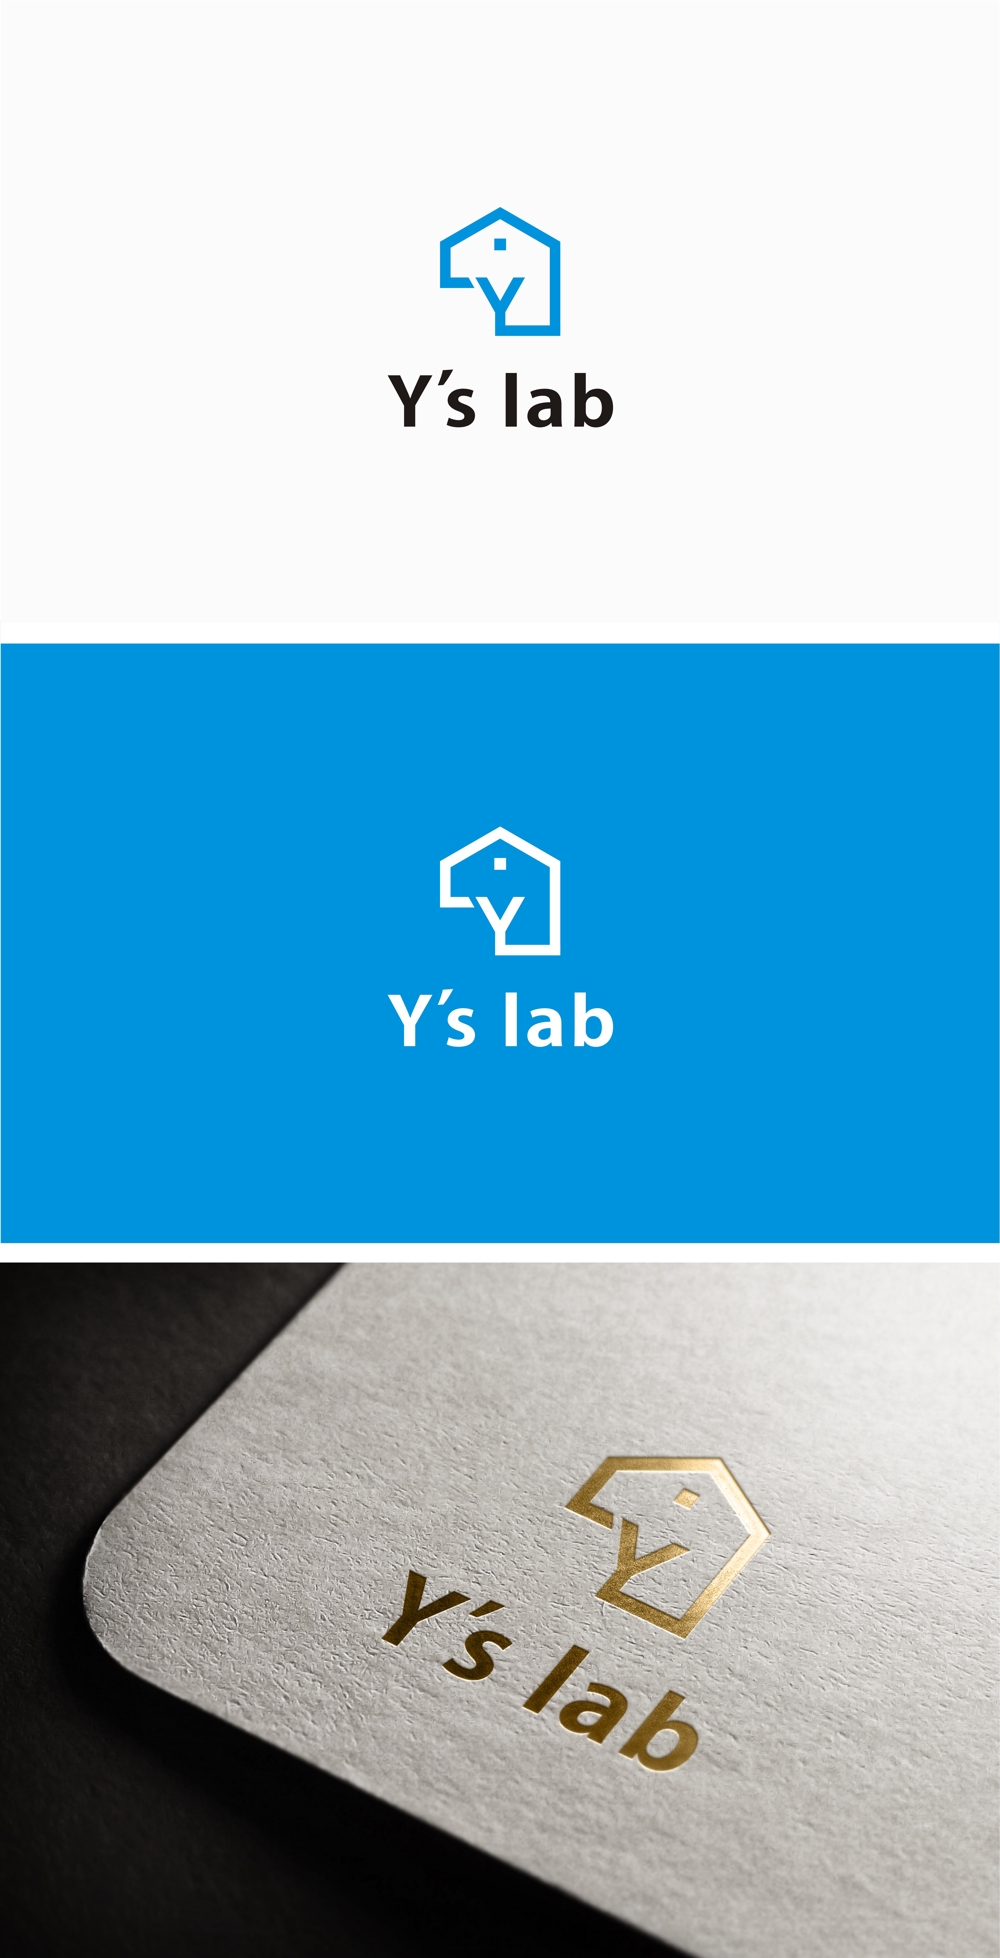 Y’s lab.jpg